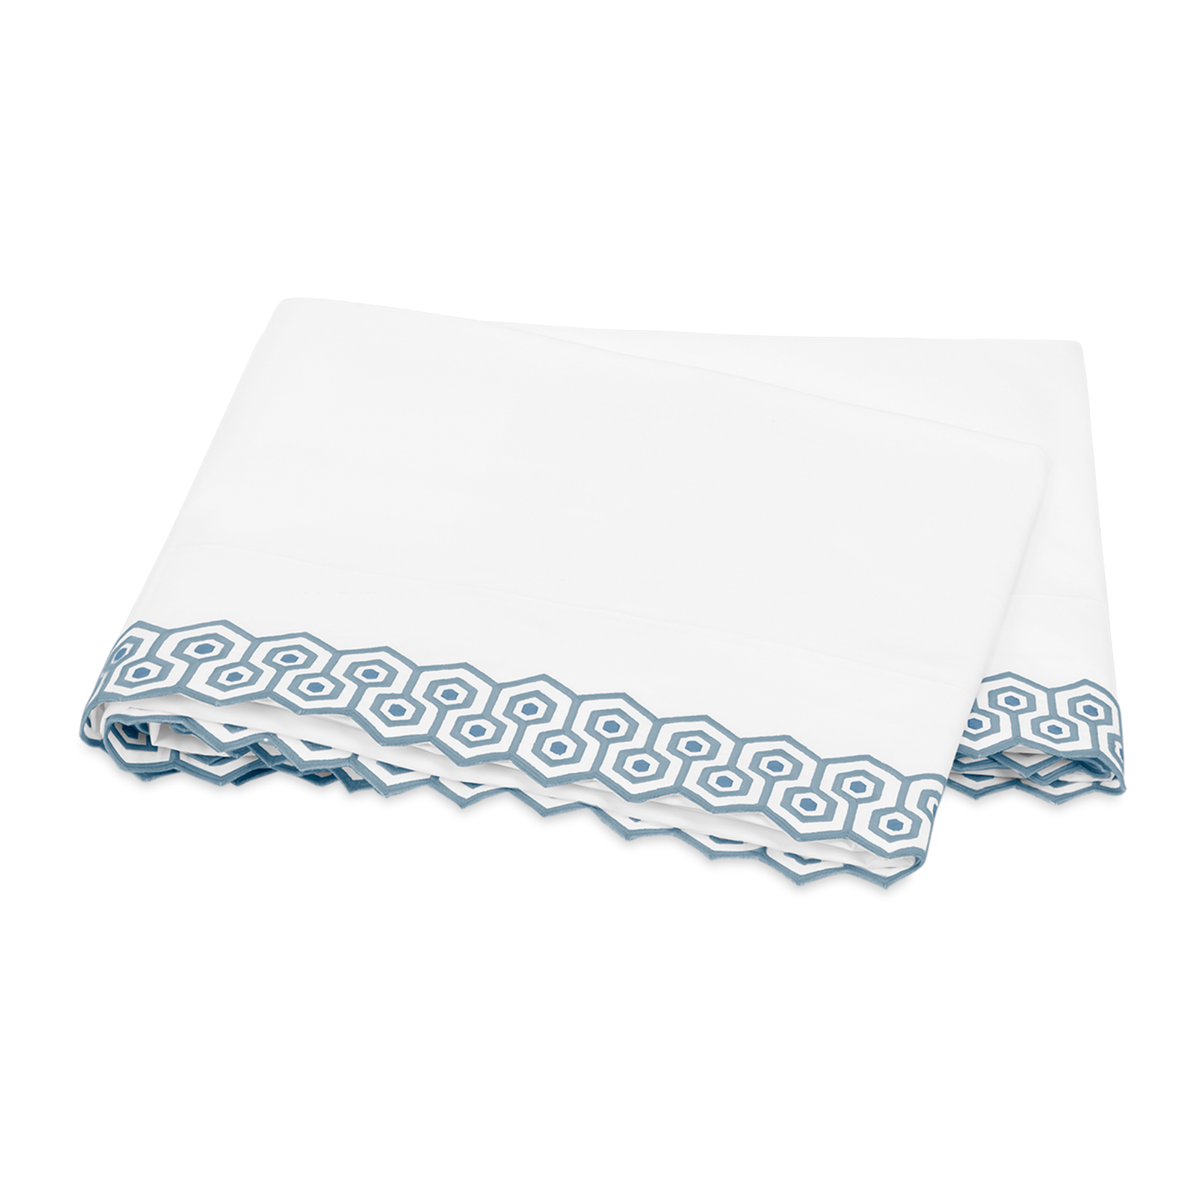 Folded Flat Sheet of Matouk Felix Bedding in Hazy Blue Color